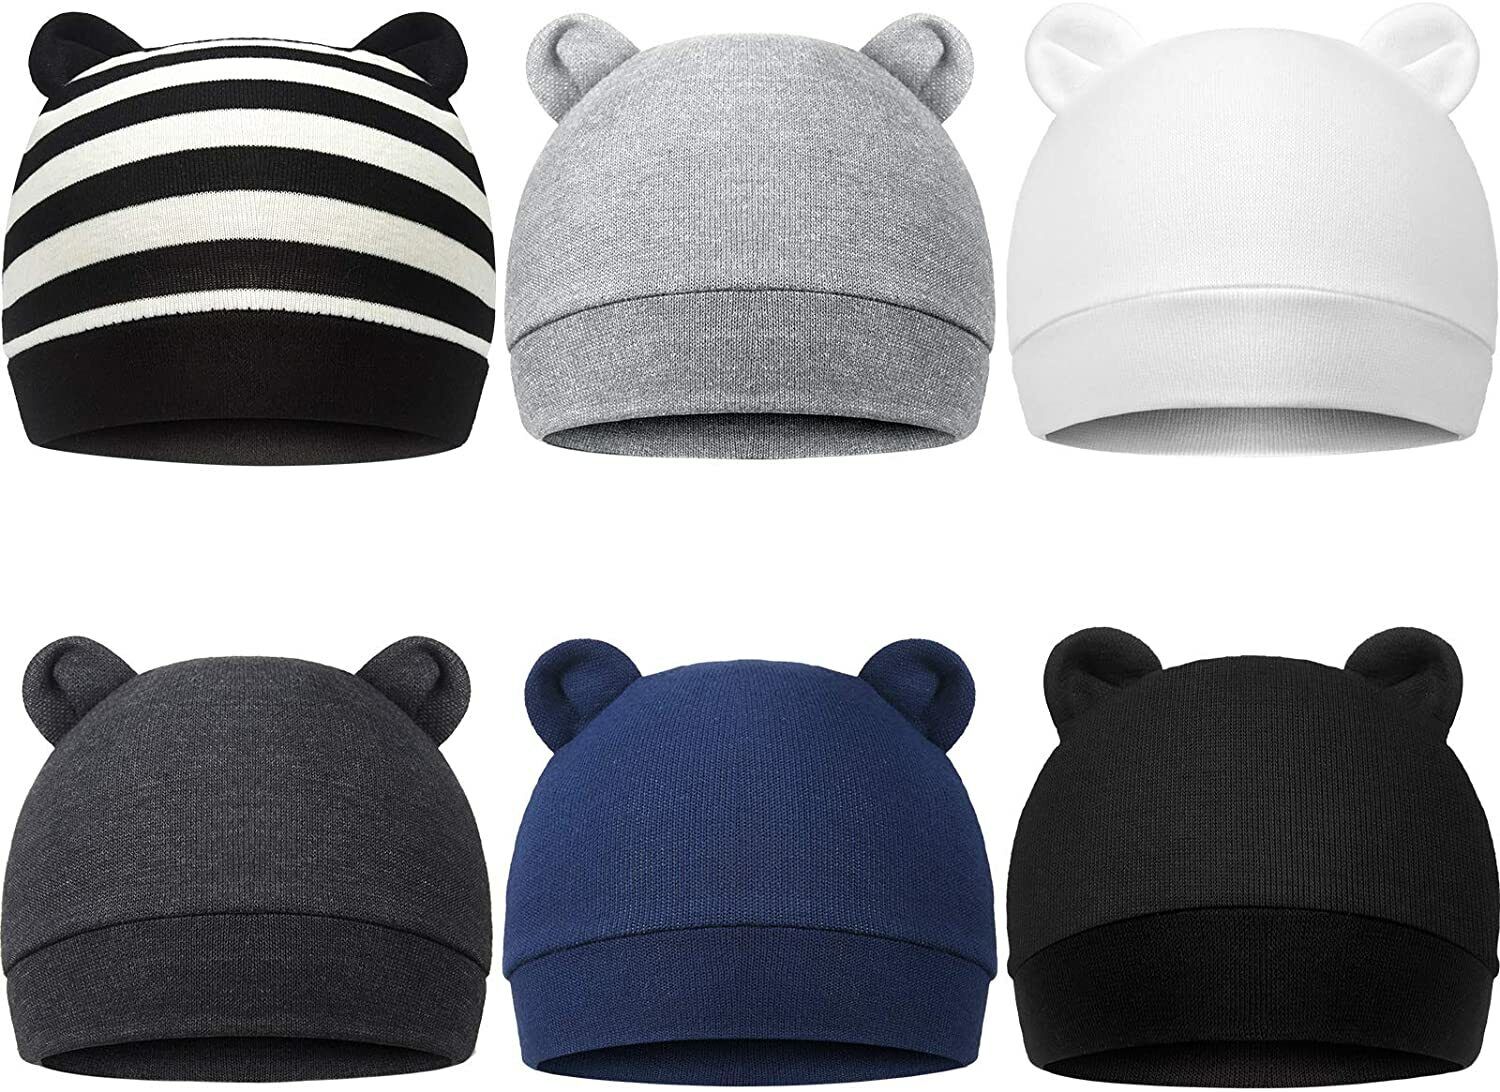 0-3 Months 6pcs Newborn Baby Hat Bear Ears Infant Caps Baby Boy Girl Hats Caps